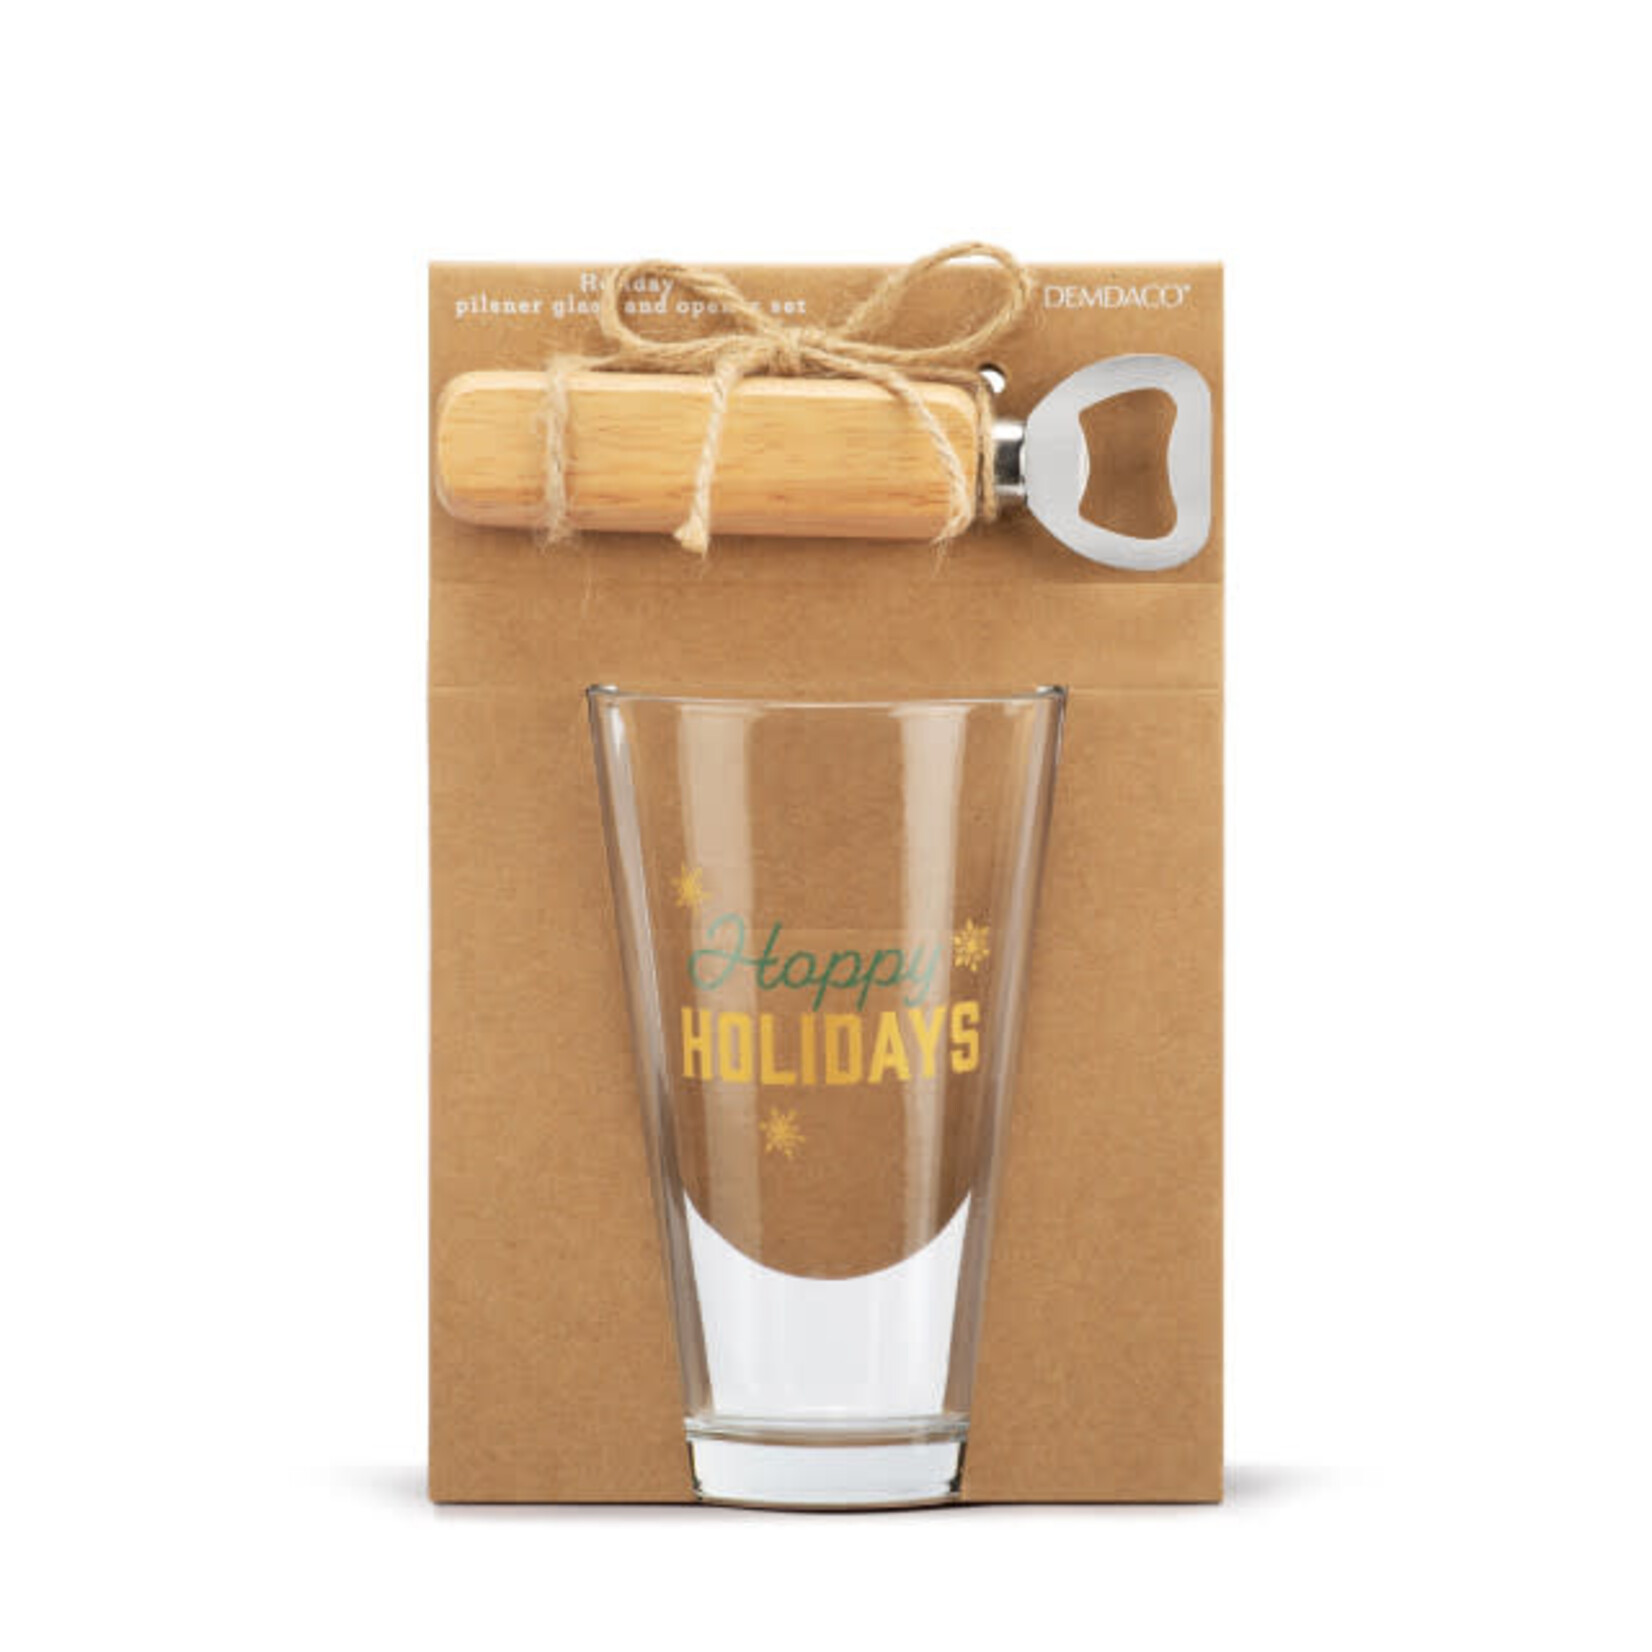 Demdaco Hoppy Holidays Pilsner Glass & Opener Set